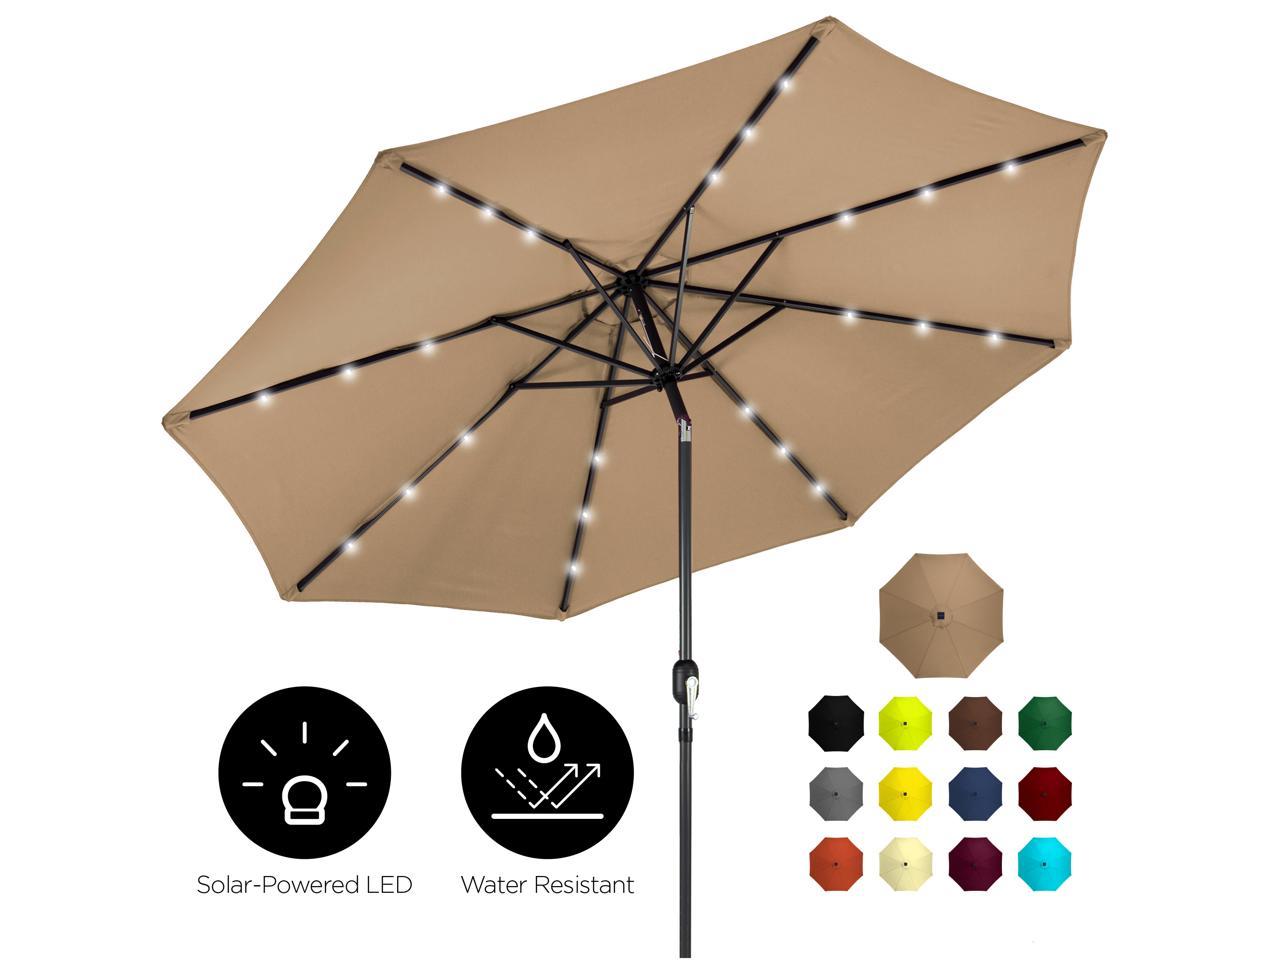 10ft solar led lighted patio umbrella